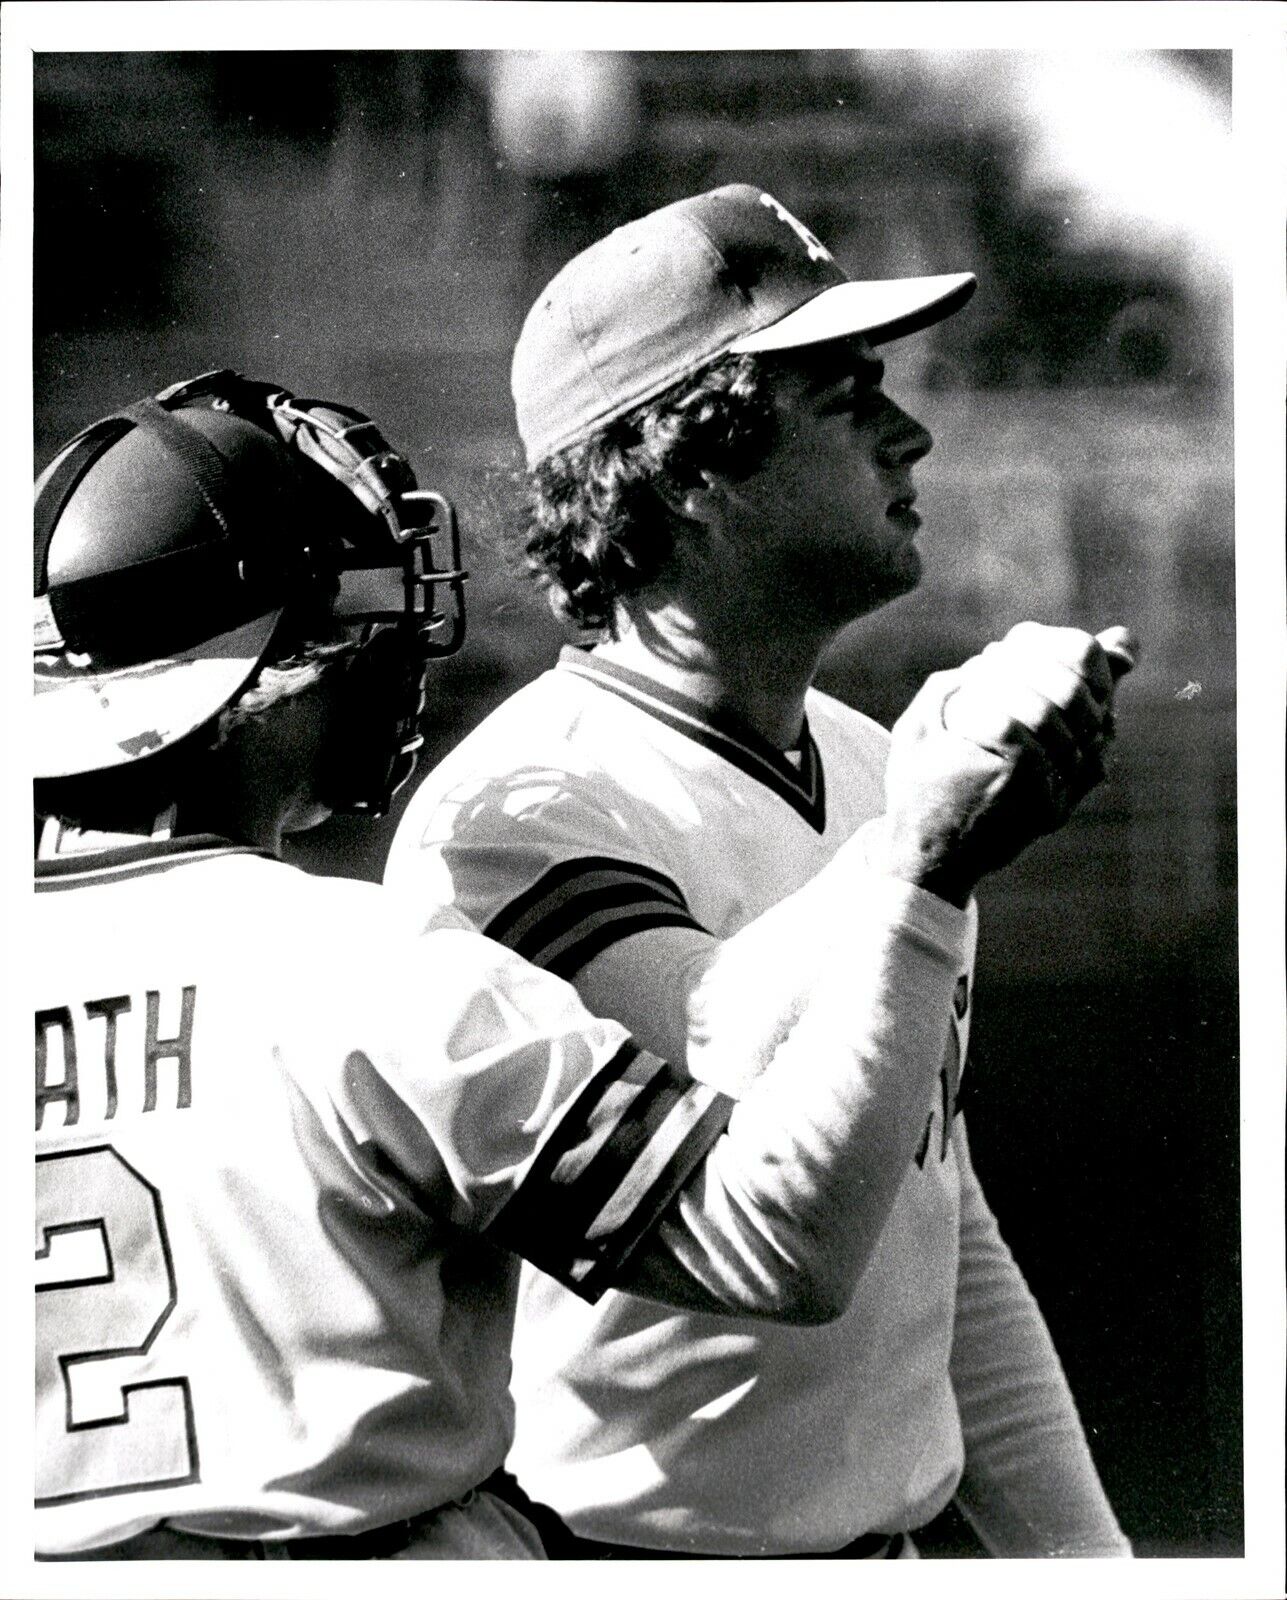 LG919 1981 Orig Russ Reed Photo MIKE HEATH CONGRATULATED JEFF JONES OAKLAND A'S